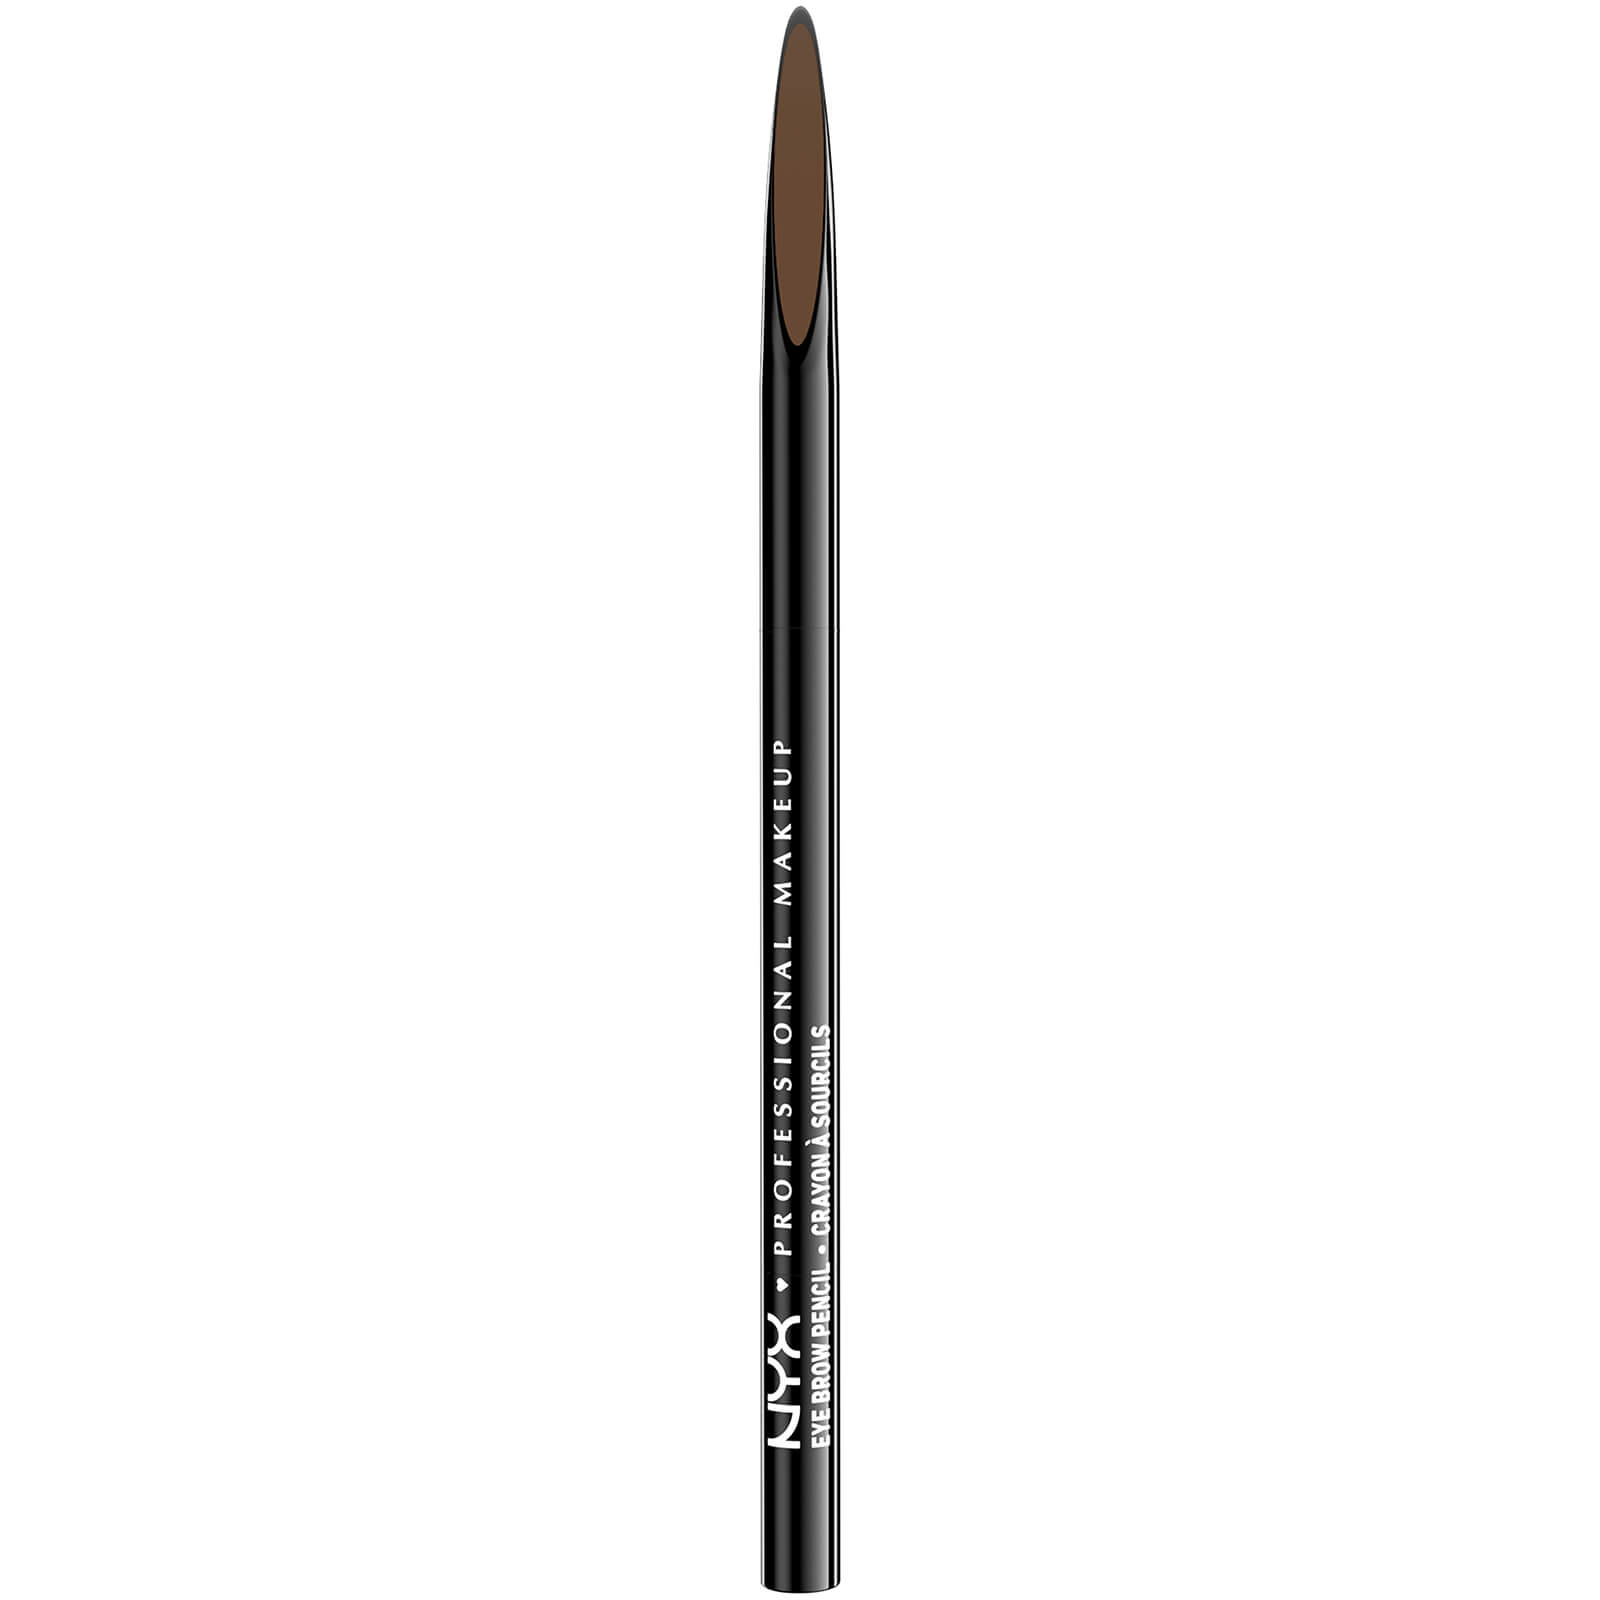 NYX Professional Makeup Precision Brow Pencil (Various Shades) - Soft Brown